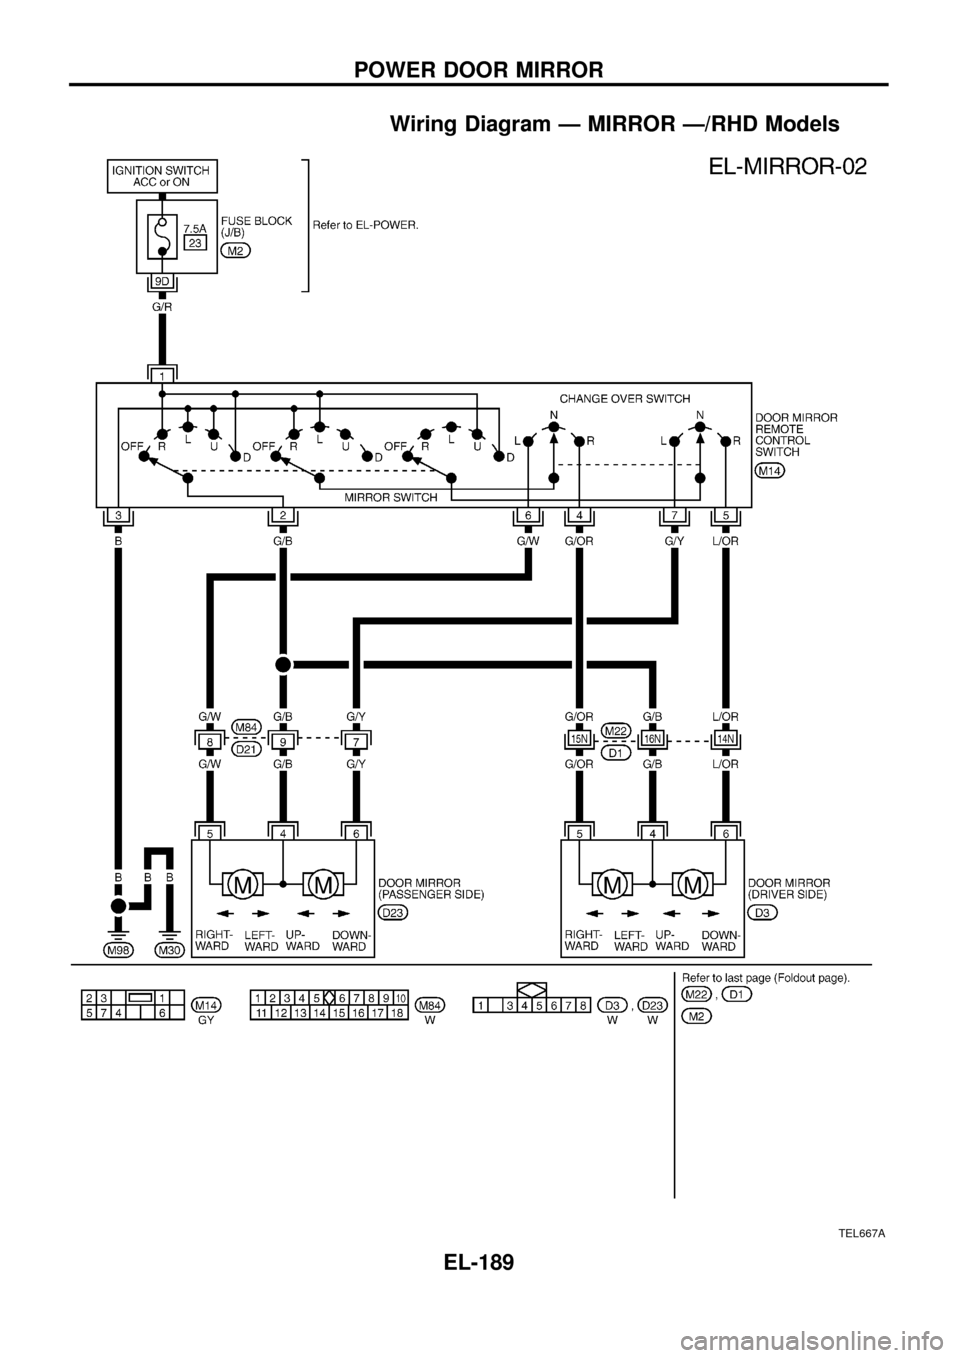 NISSAN PATROL 1998 Y61 / 5.G Electrical System Workshop Manual Wiring Diagram Ð MIRROR Ð/RHD Models
TEL667A
POWER DOOR MIRROR
EL-189 